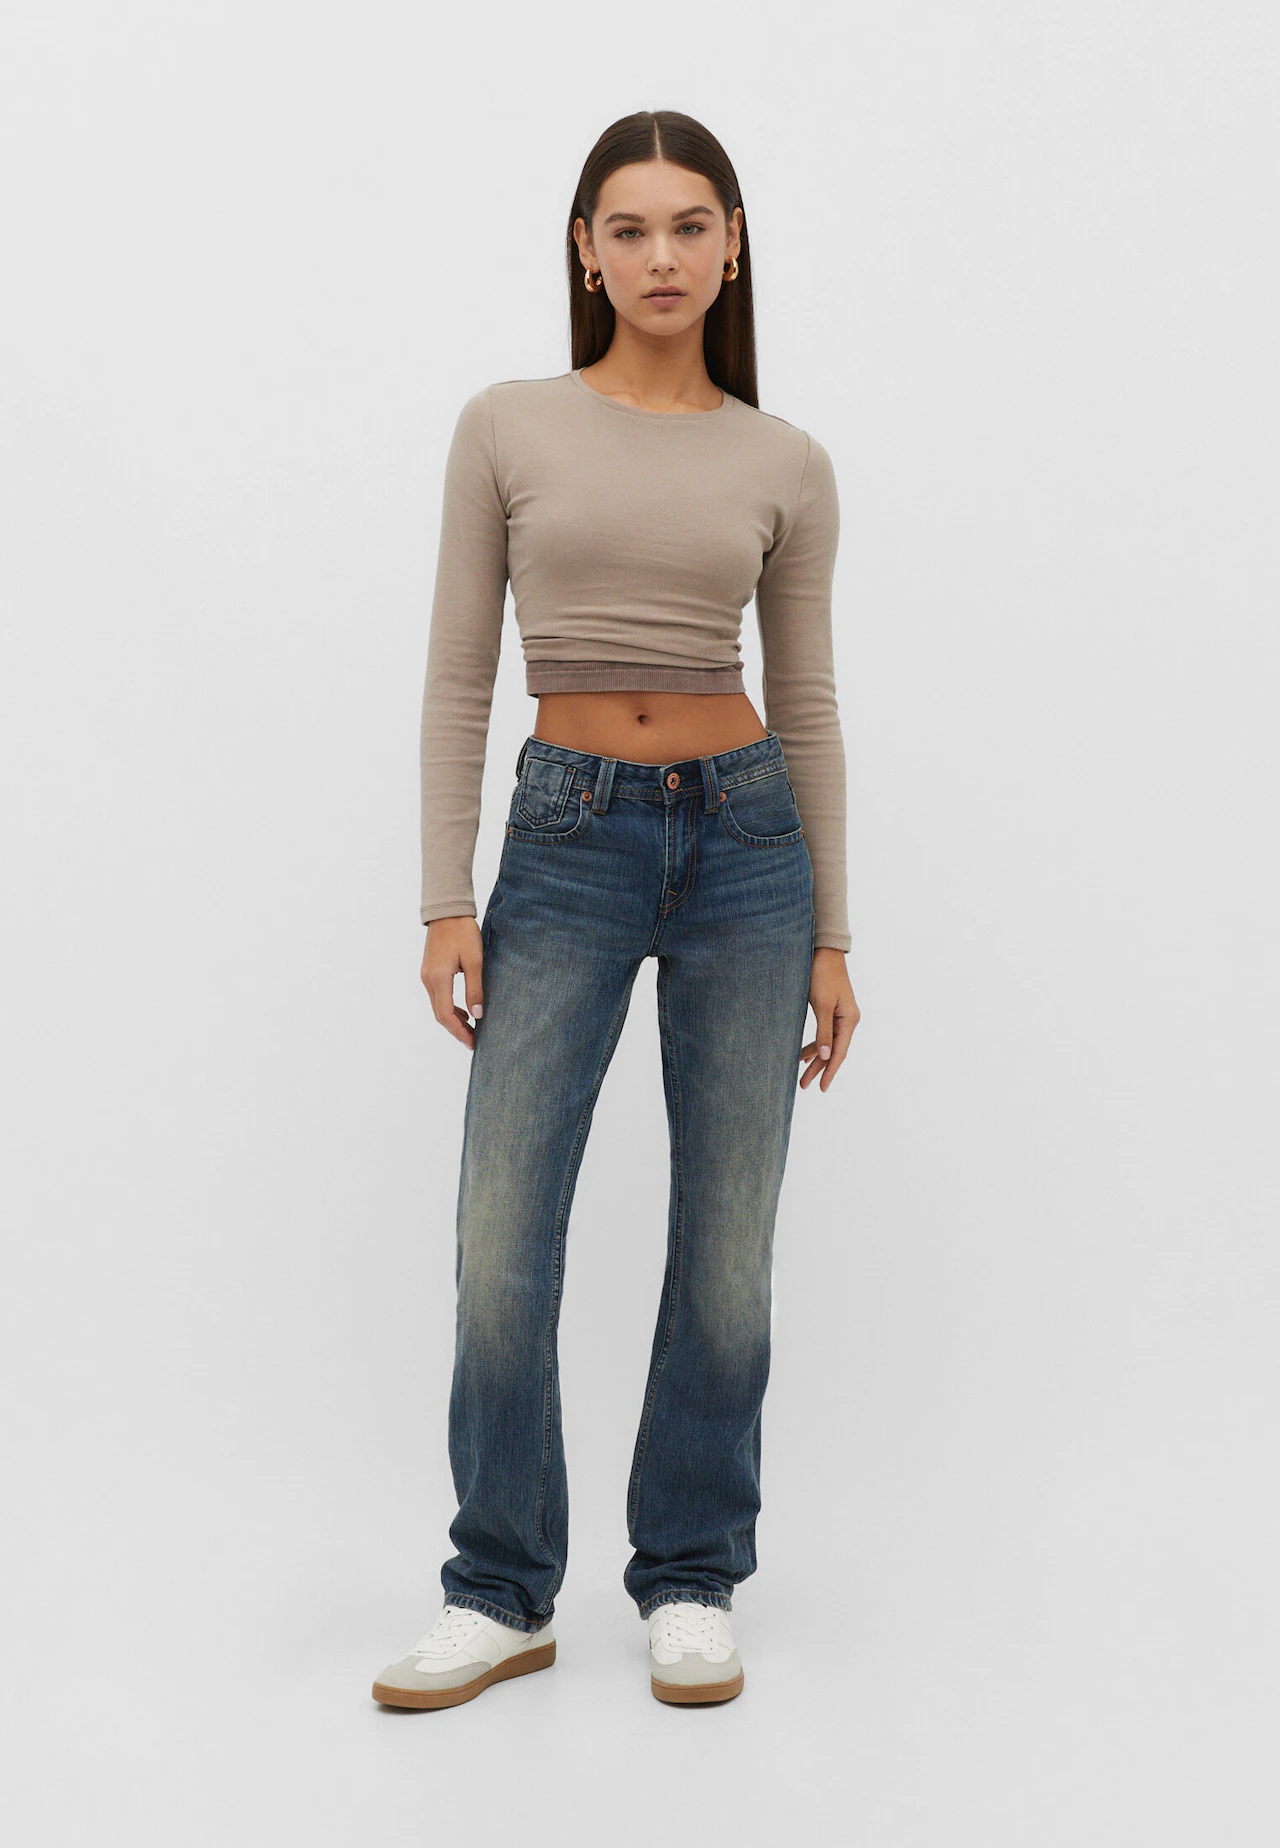 D94 Straight-fit low-waist jeans - Women's fashion